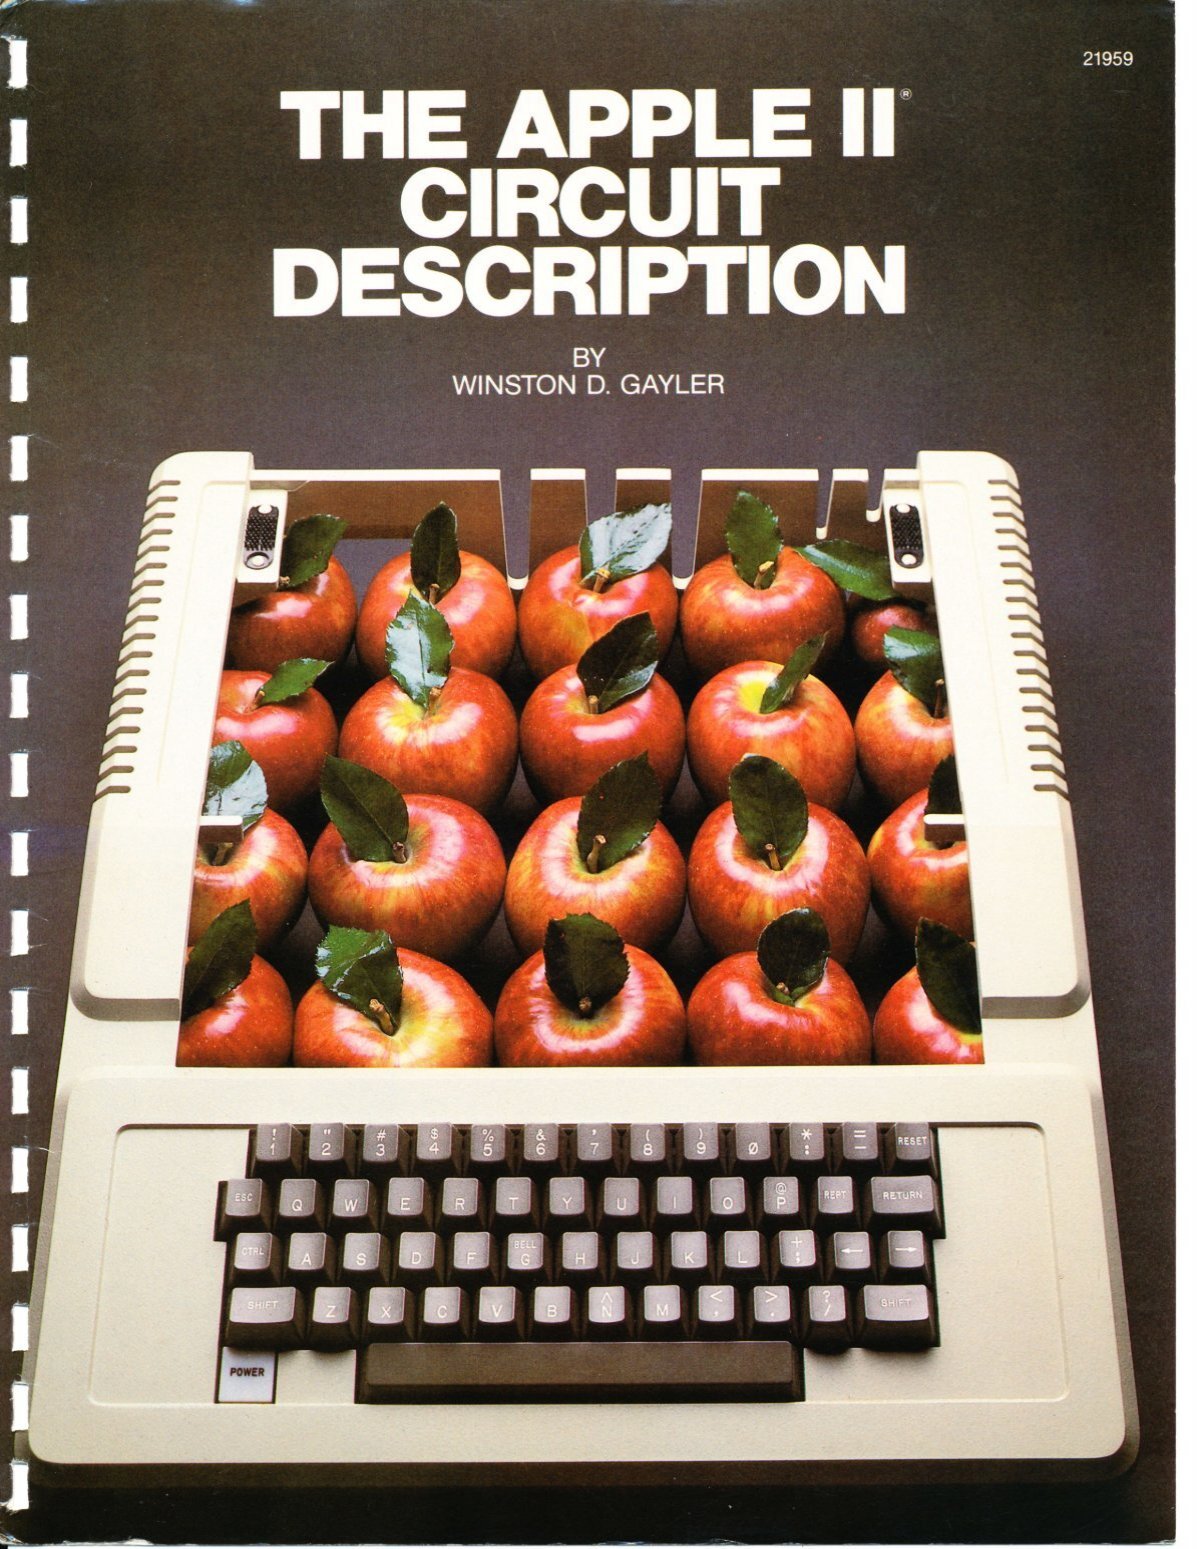 W. Gayler - The Apple II Circuit Description